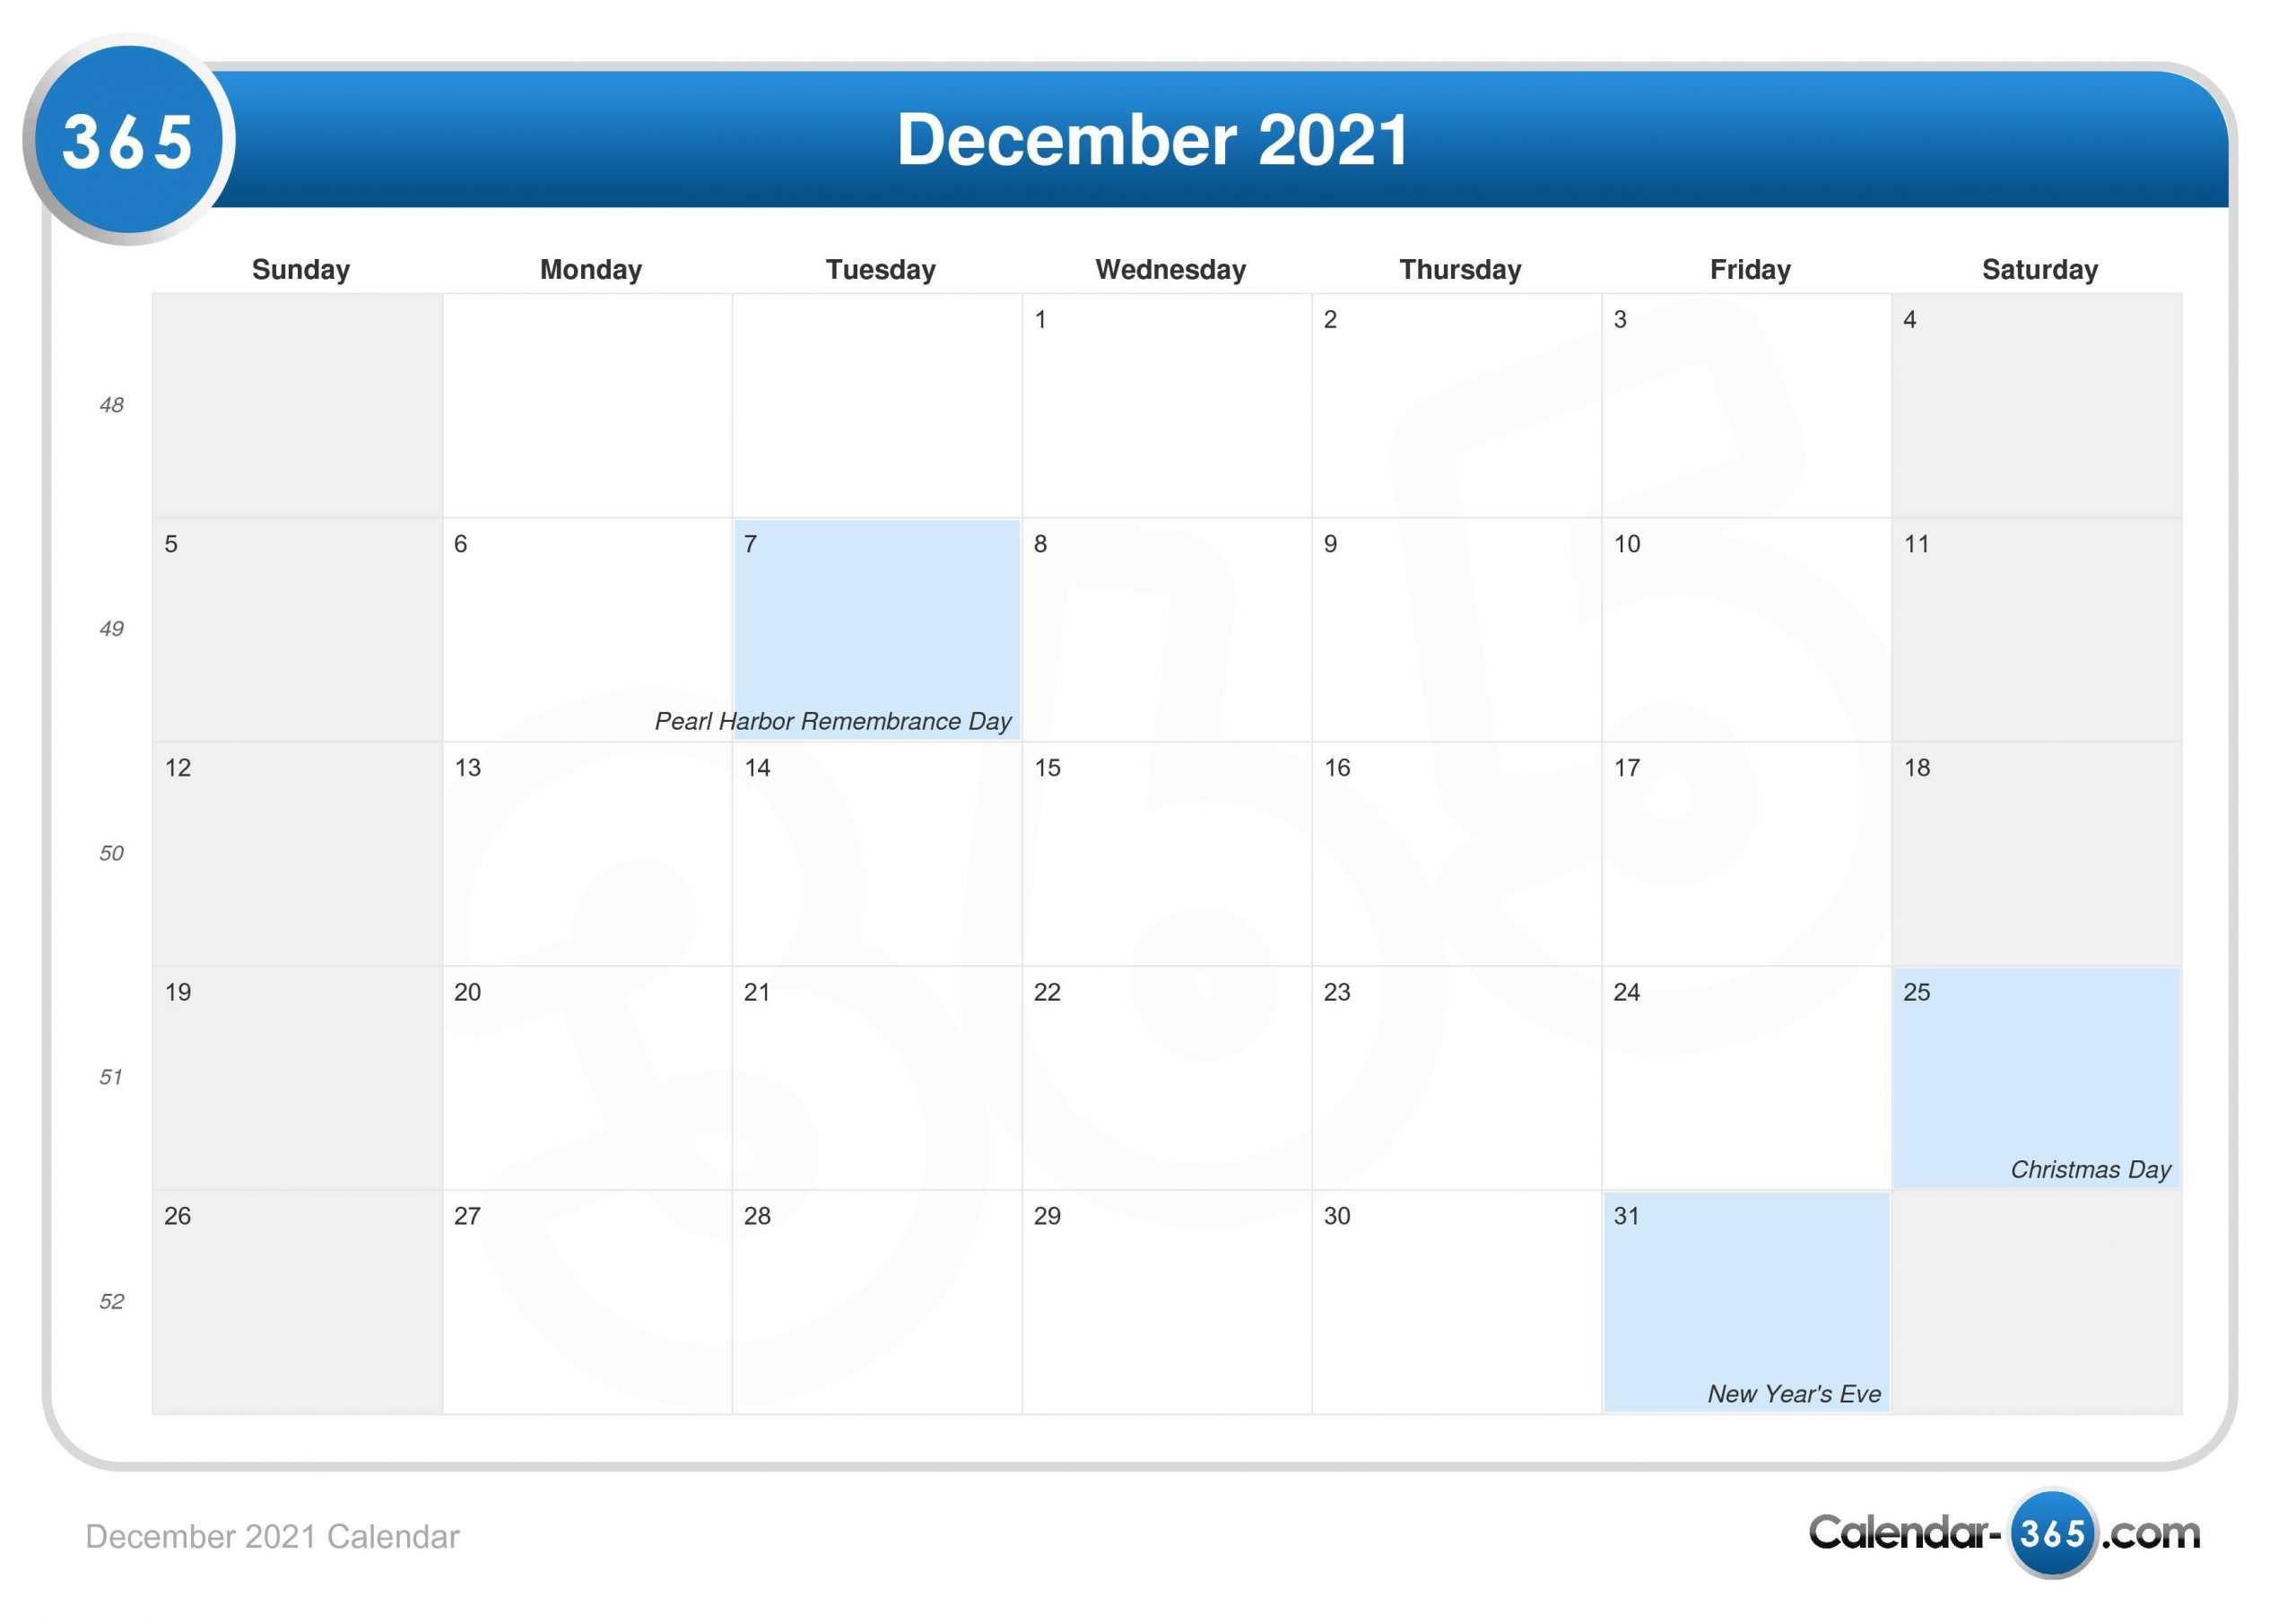 December 2021 Calendar December 2021 Calendar With Holidays